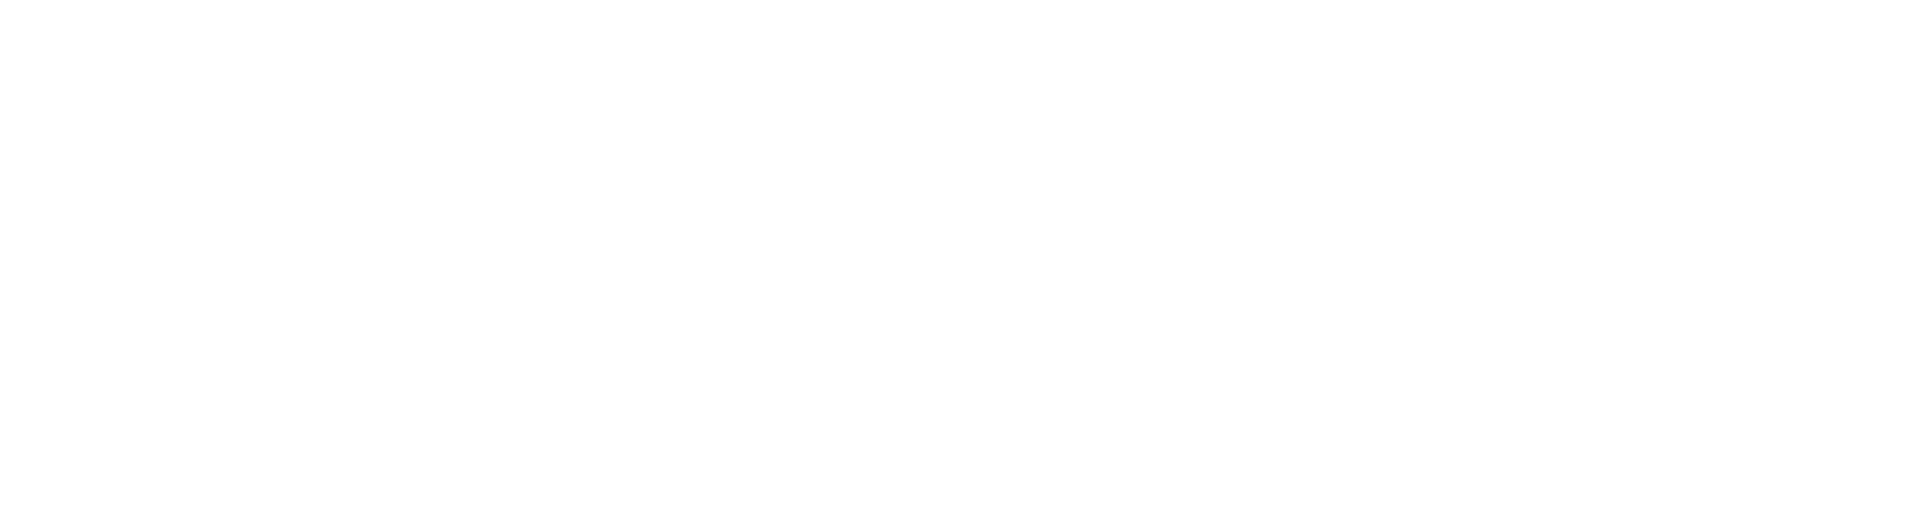 House of Dermatology White Logo